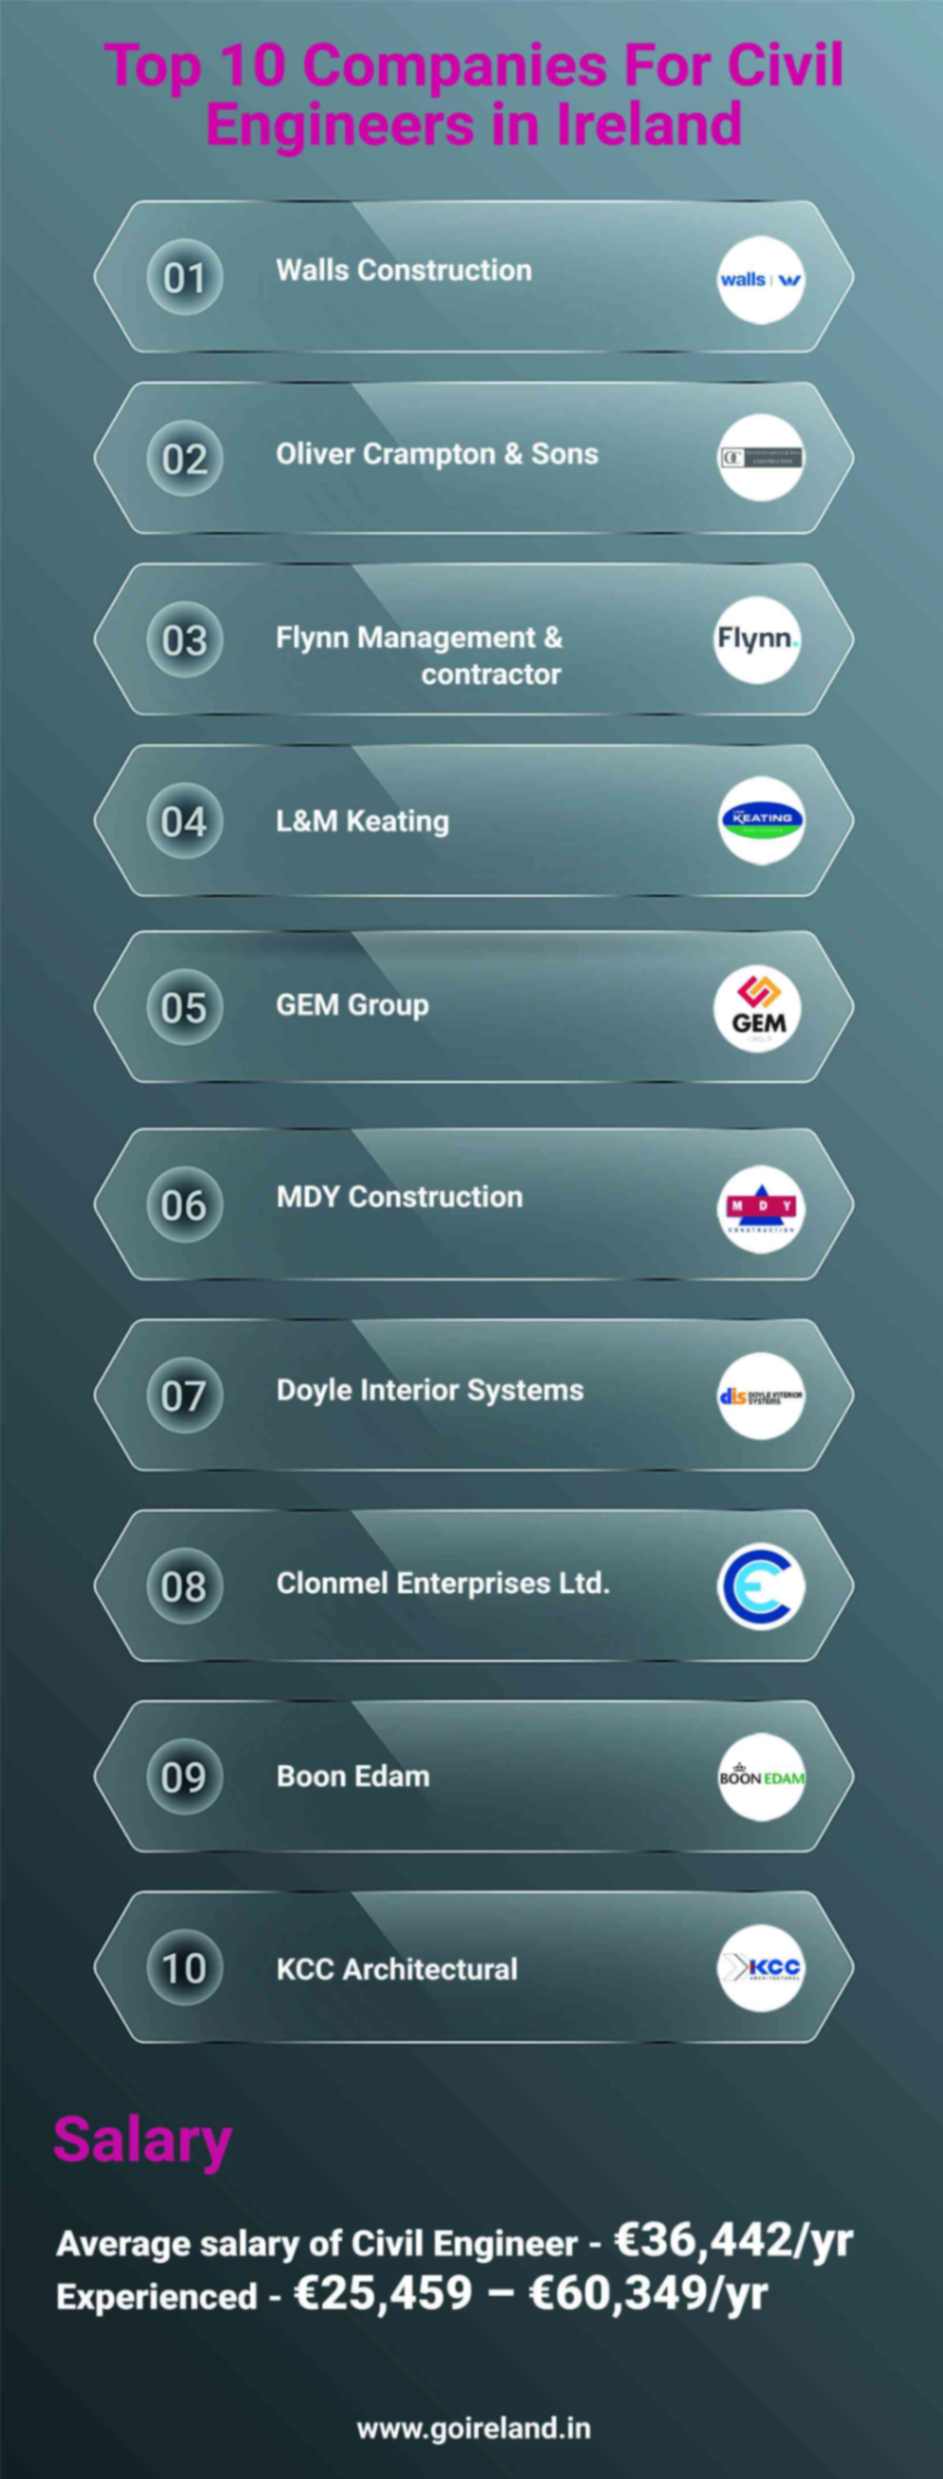 Top 10 Companies for Civil Engineers in Ireland